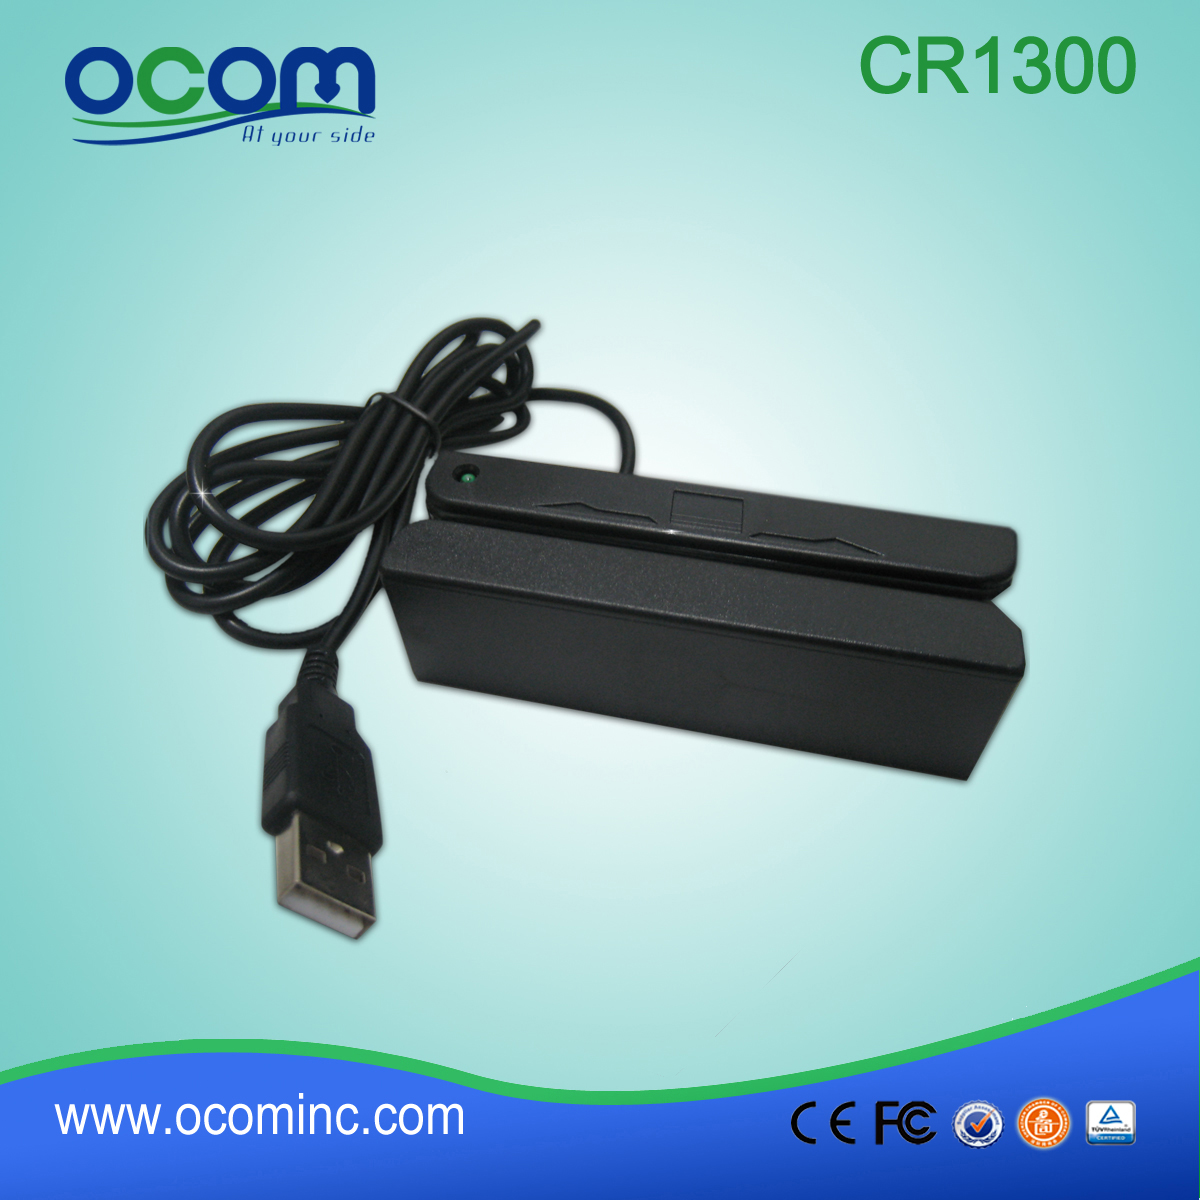 CR1300 OCOM磁卡读卡器用于GPS追踪